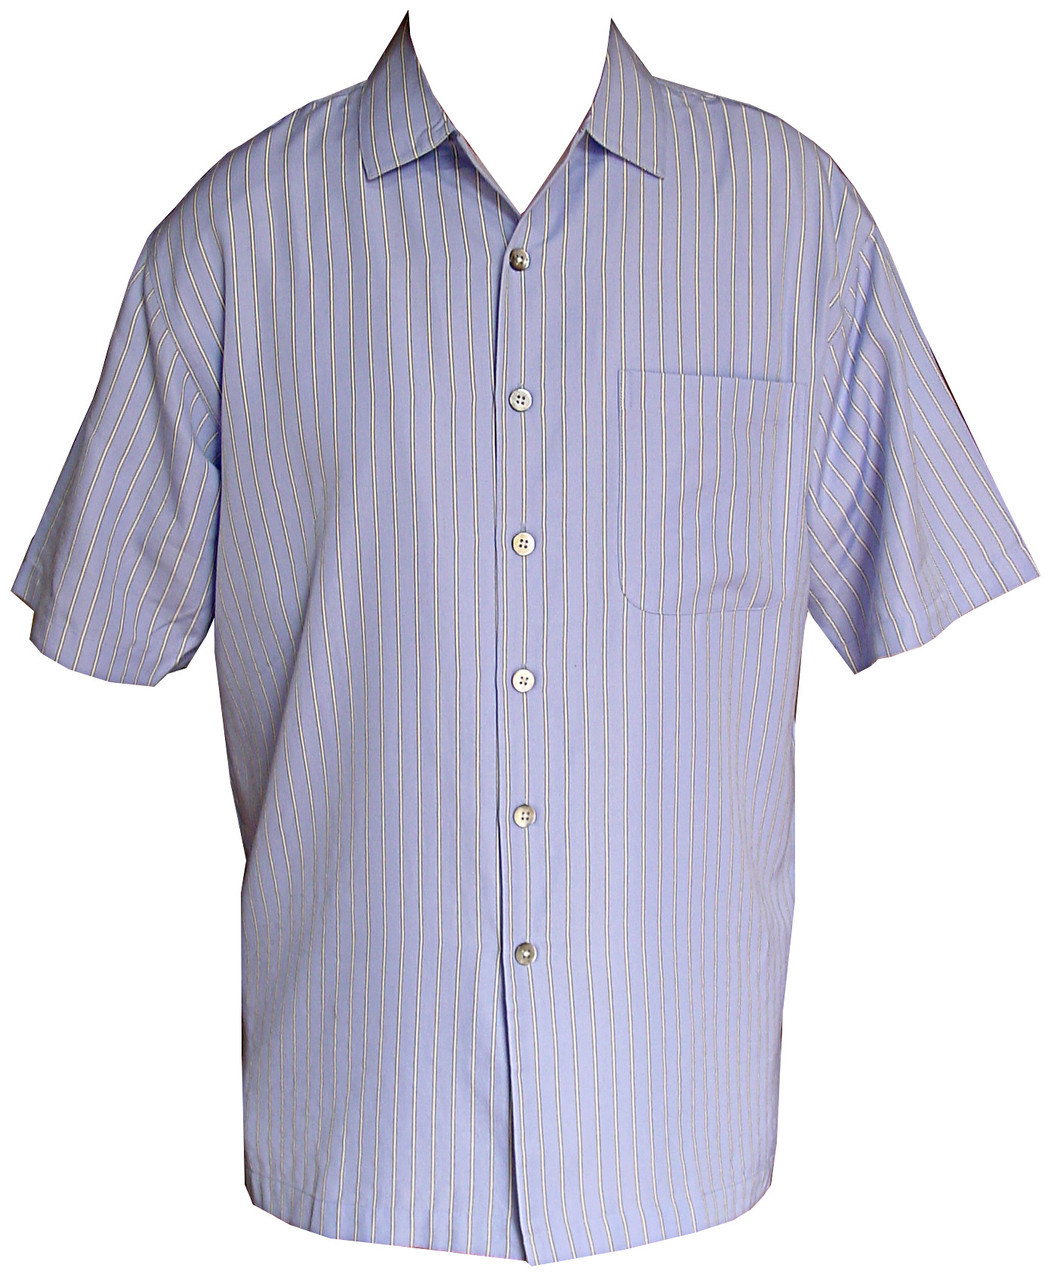 SS726 Men's Washed Silk/Tencel Woven Stripes Campshirts - FonteShirts.com